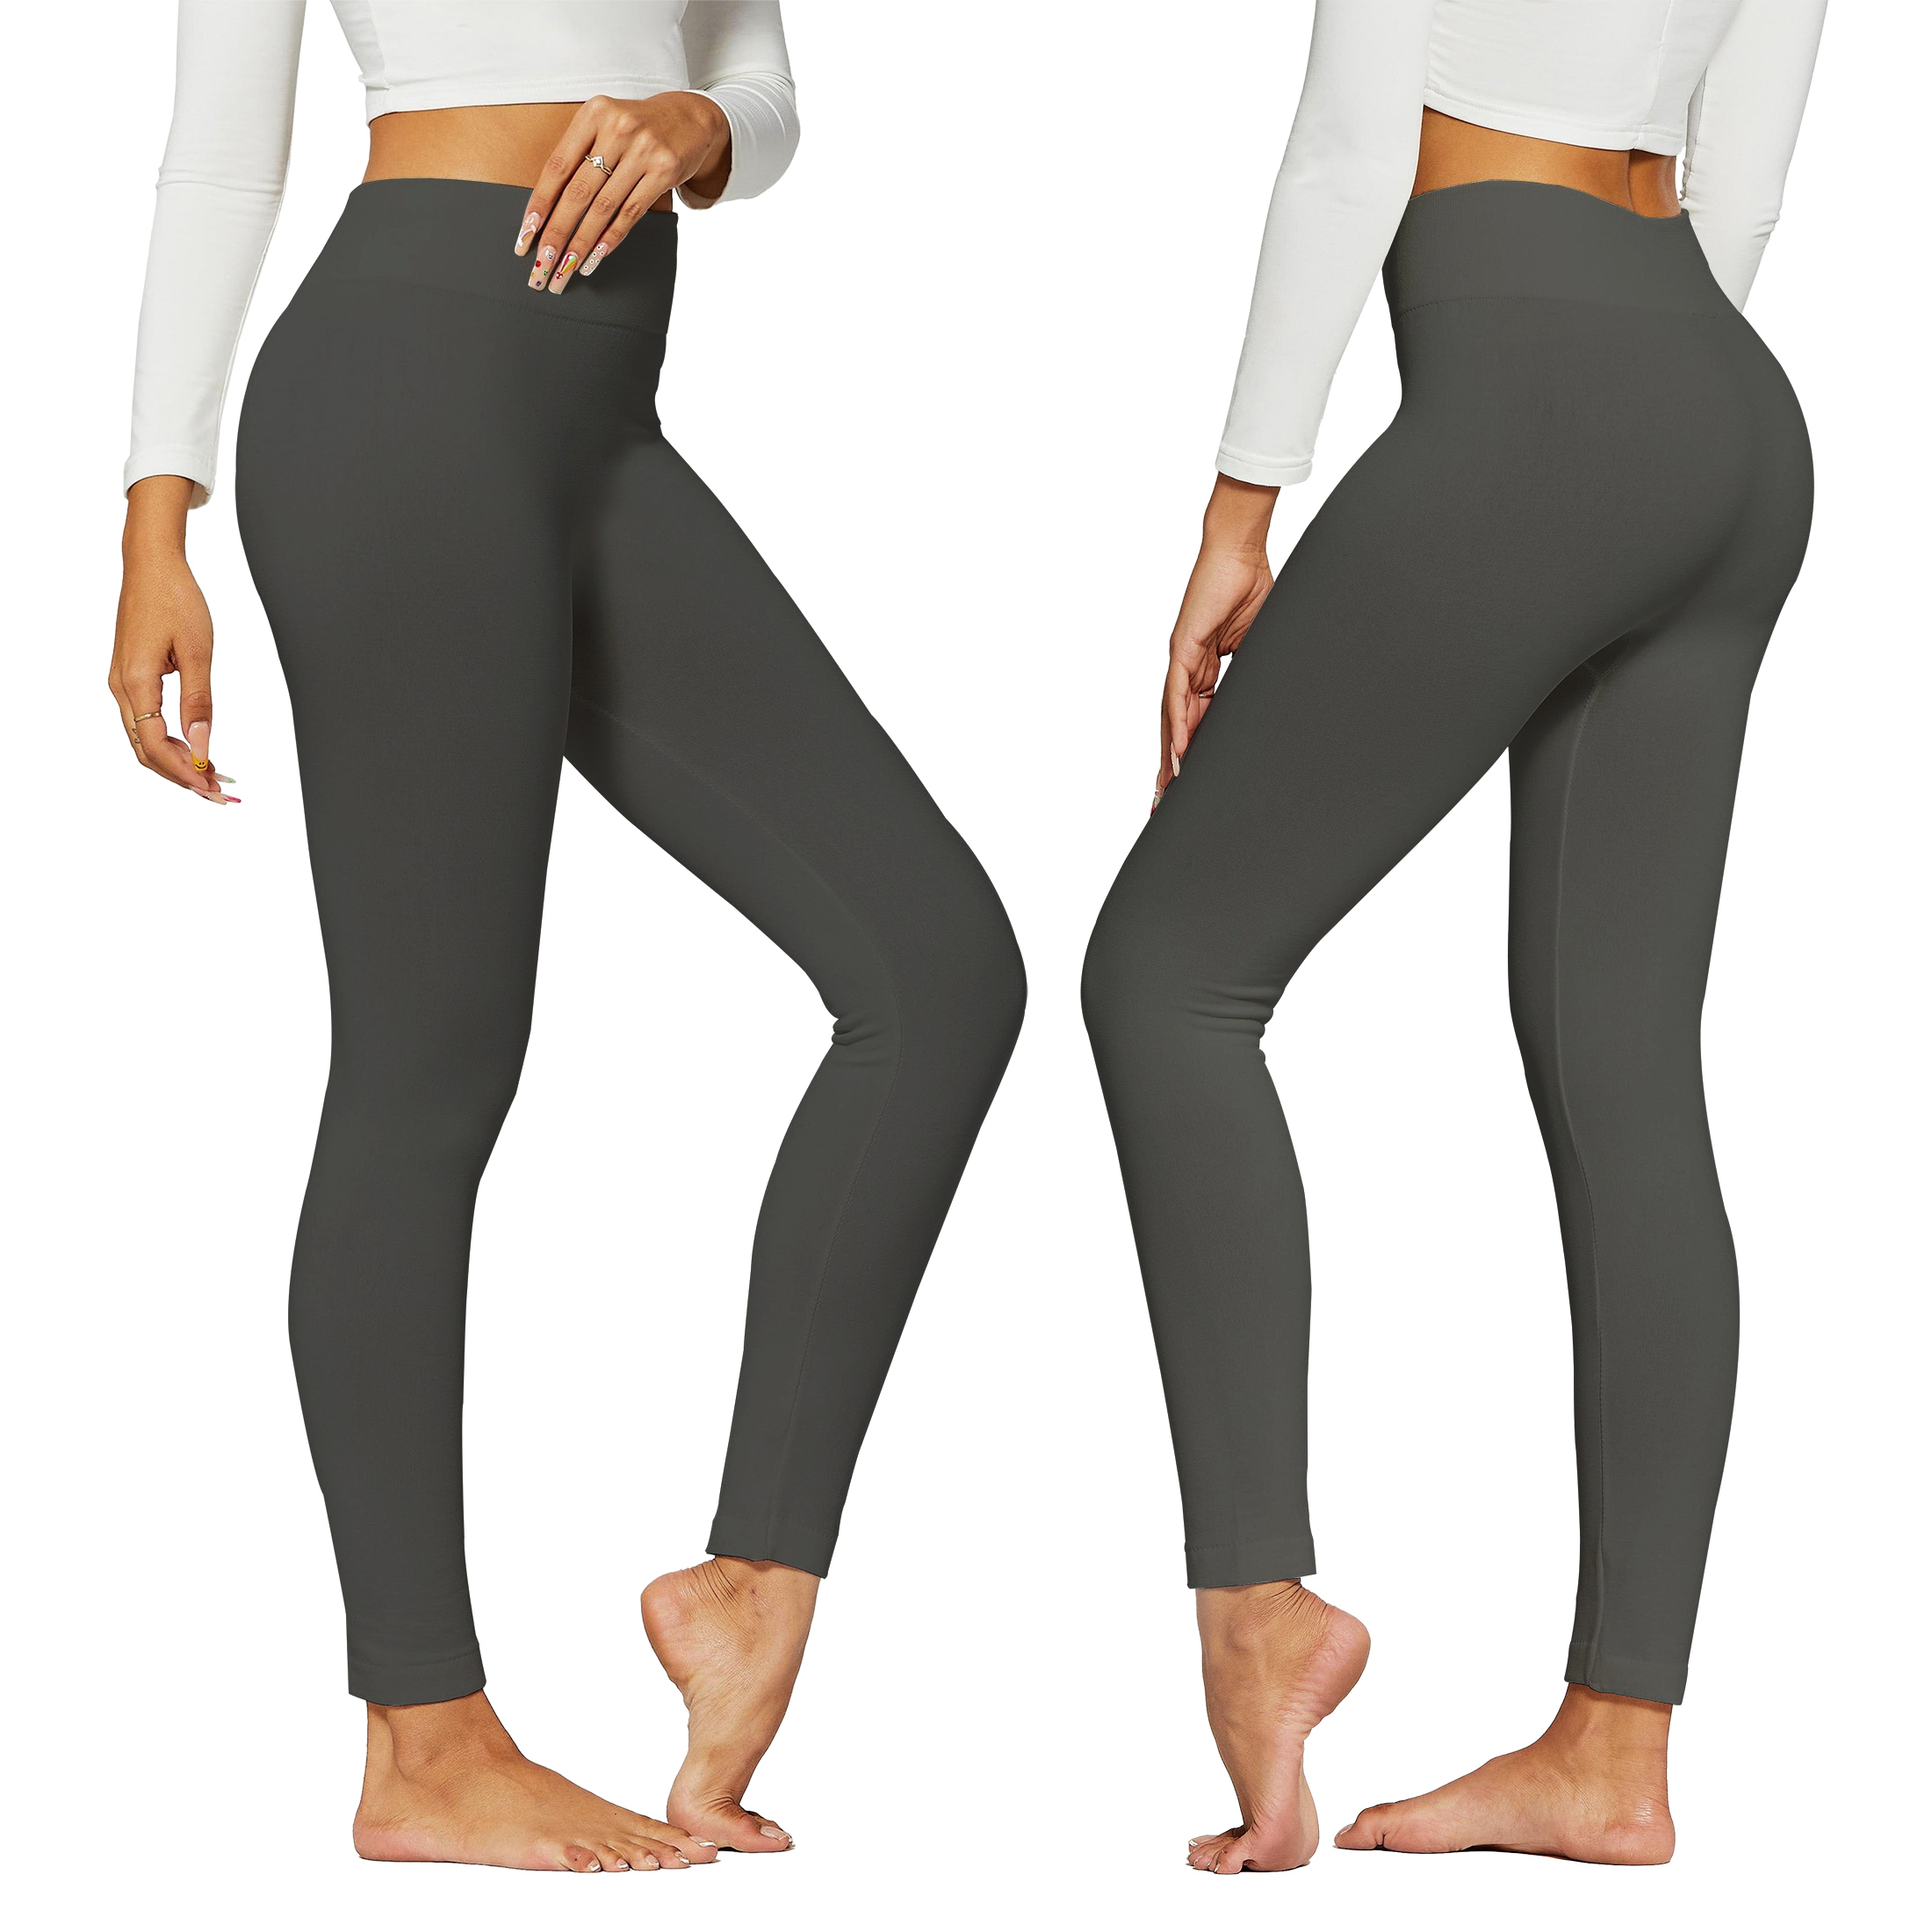 Women's Premium Quality High-Waist Fleece Lined Leggings (S-4X) - Grey, Large/X-Large